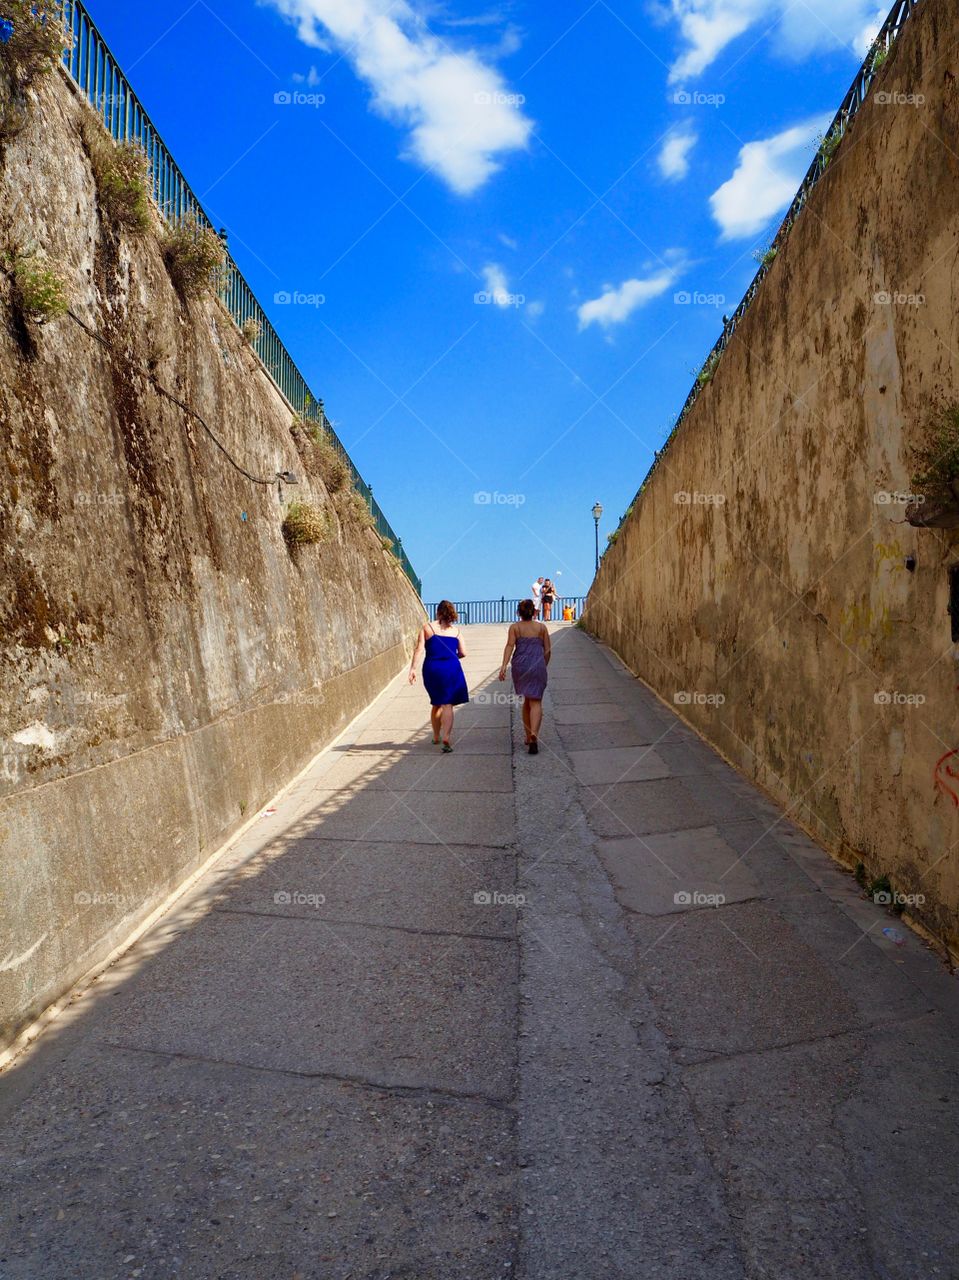 Two girls ascending a walkway in the sun, Corfu Town, Greece